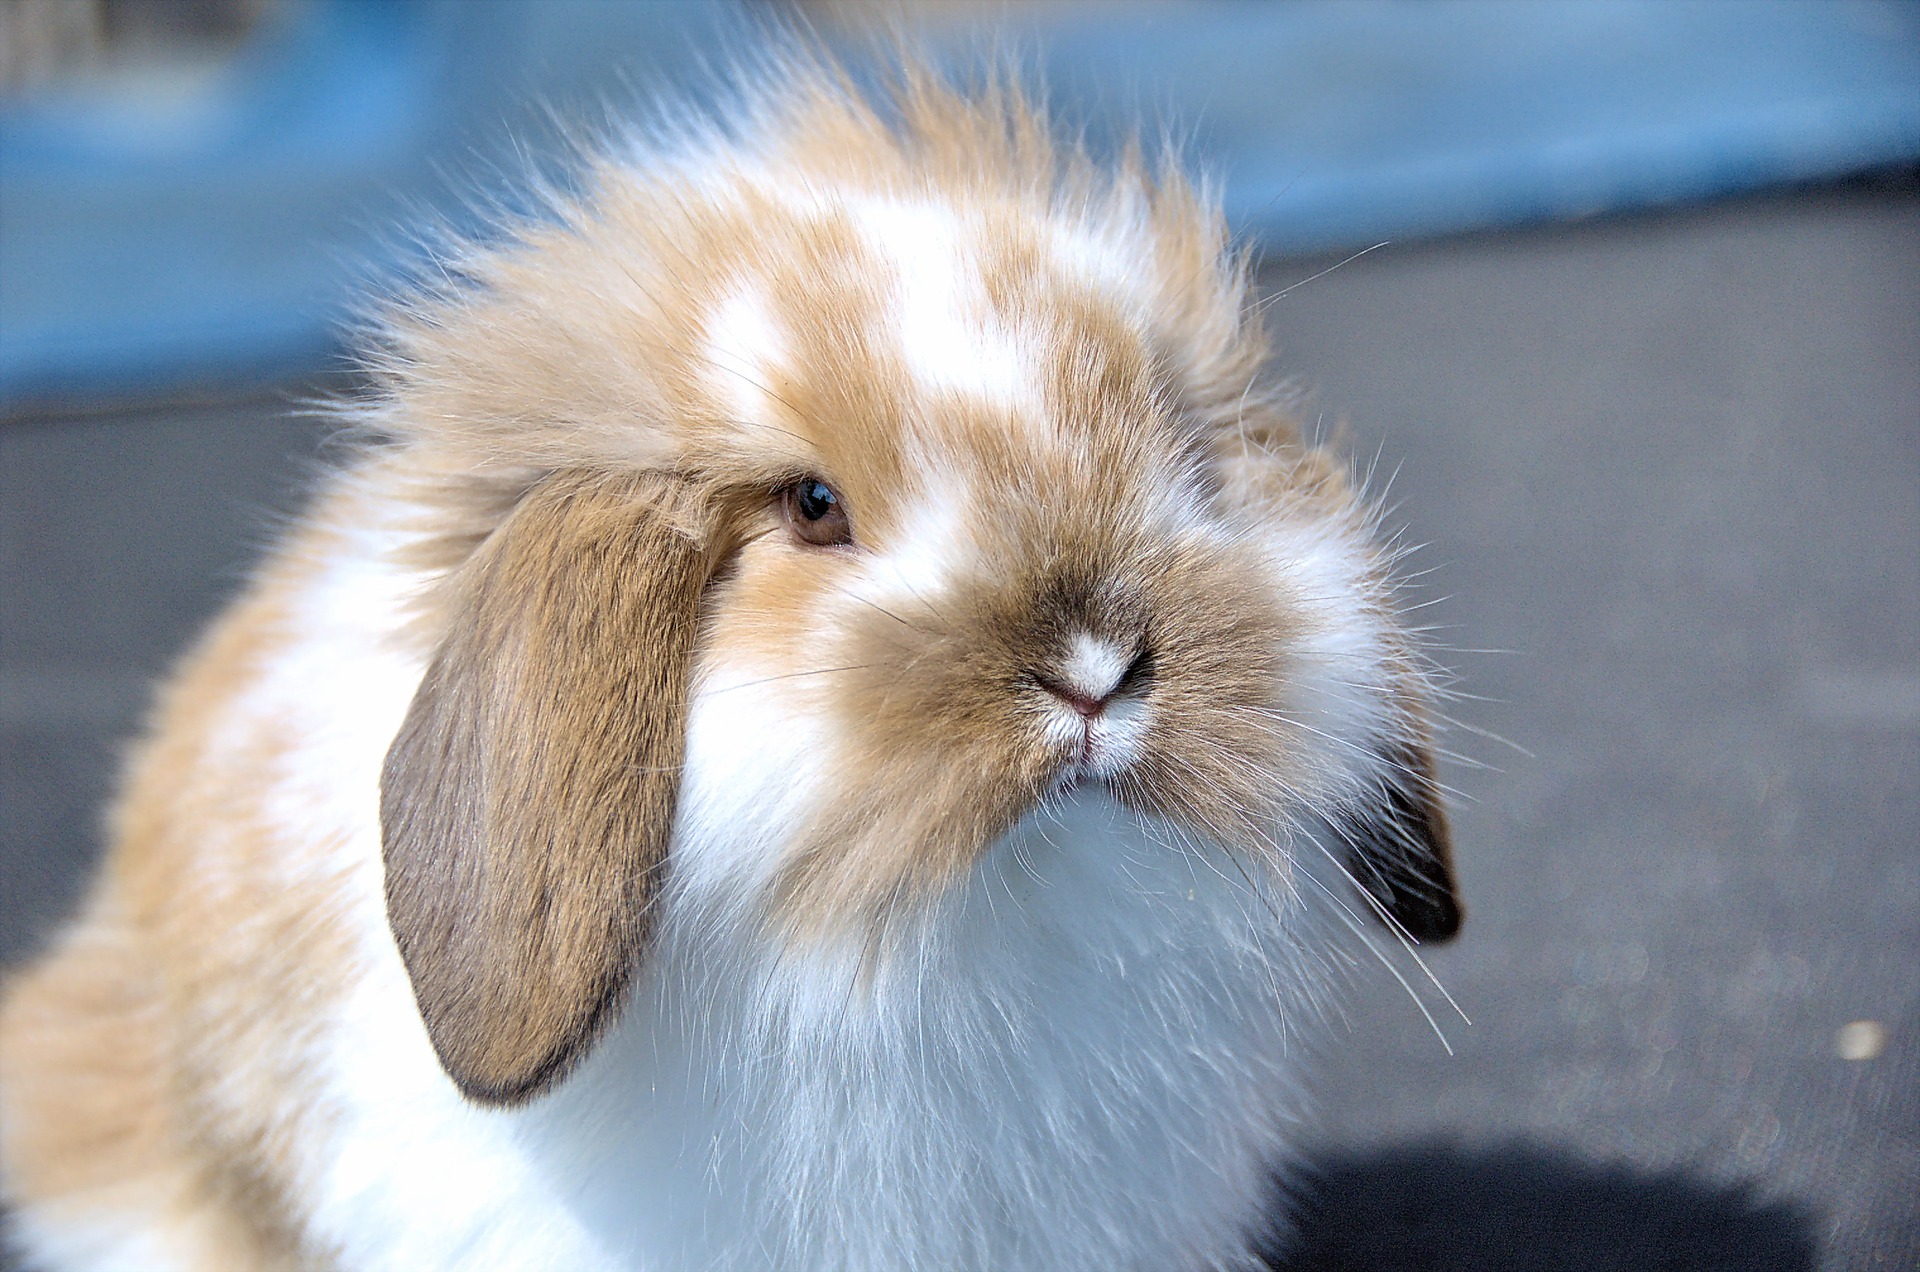 adorable lop eared bunnies